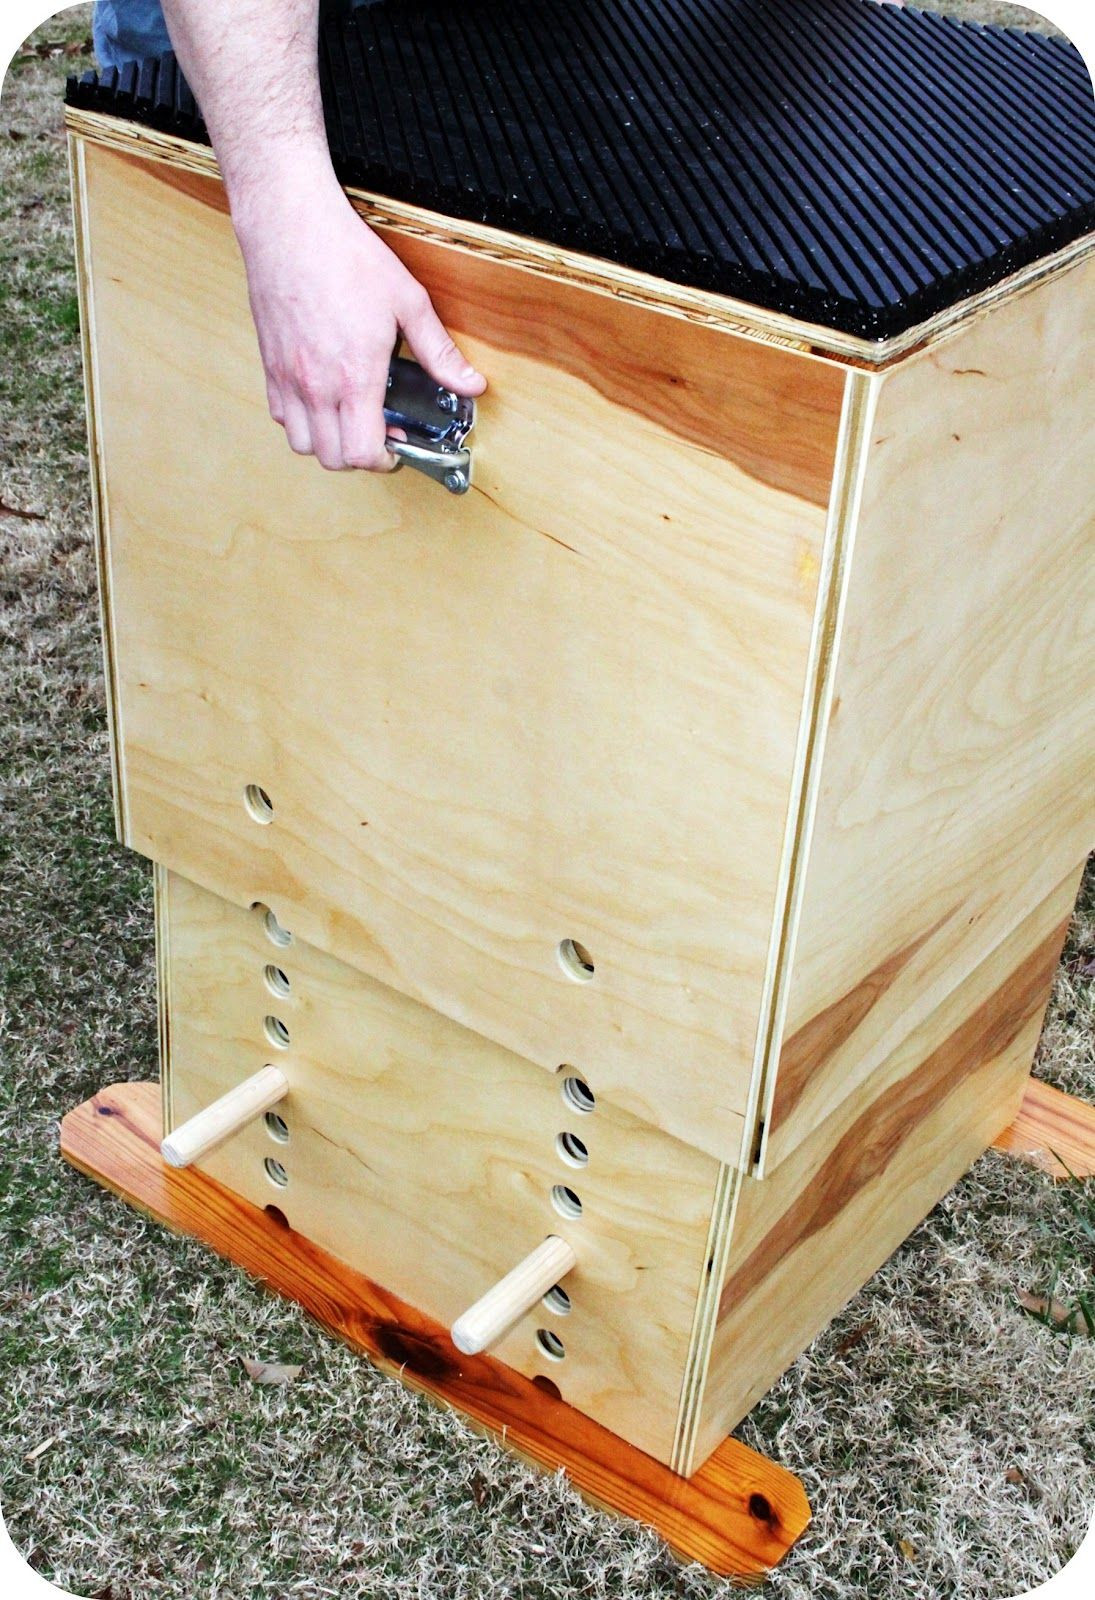 DIY Box Jump
 TrendyToolbox ADJUSTABLE WOODEN PLYO BOX